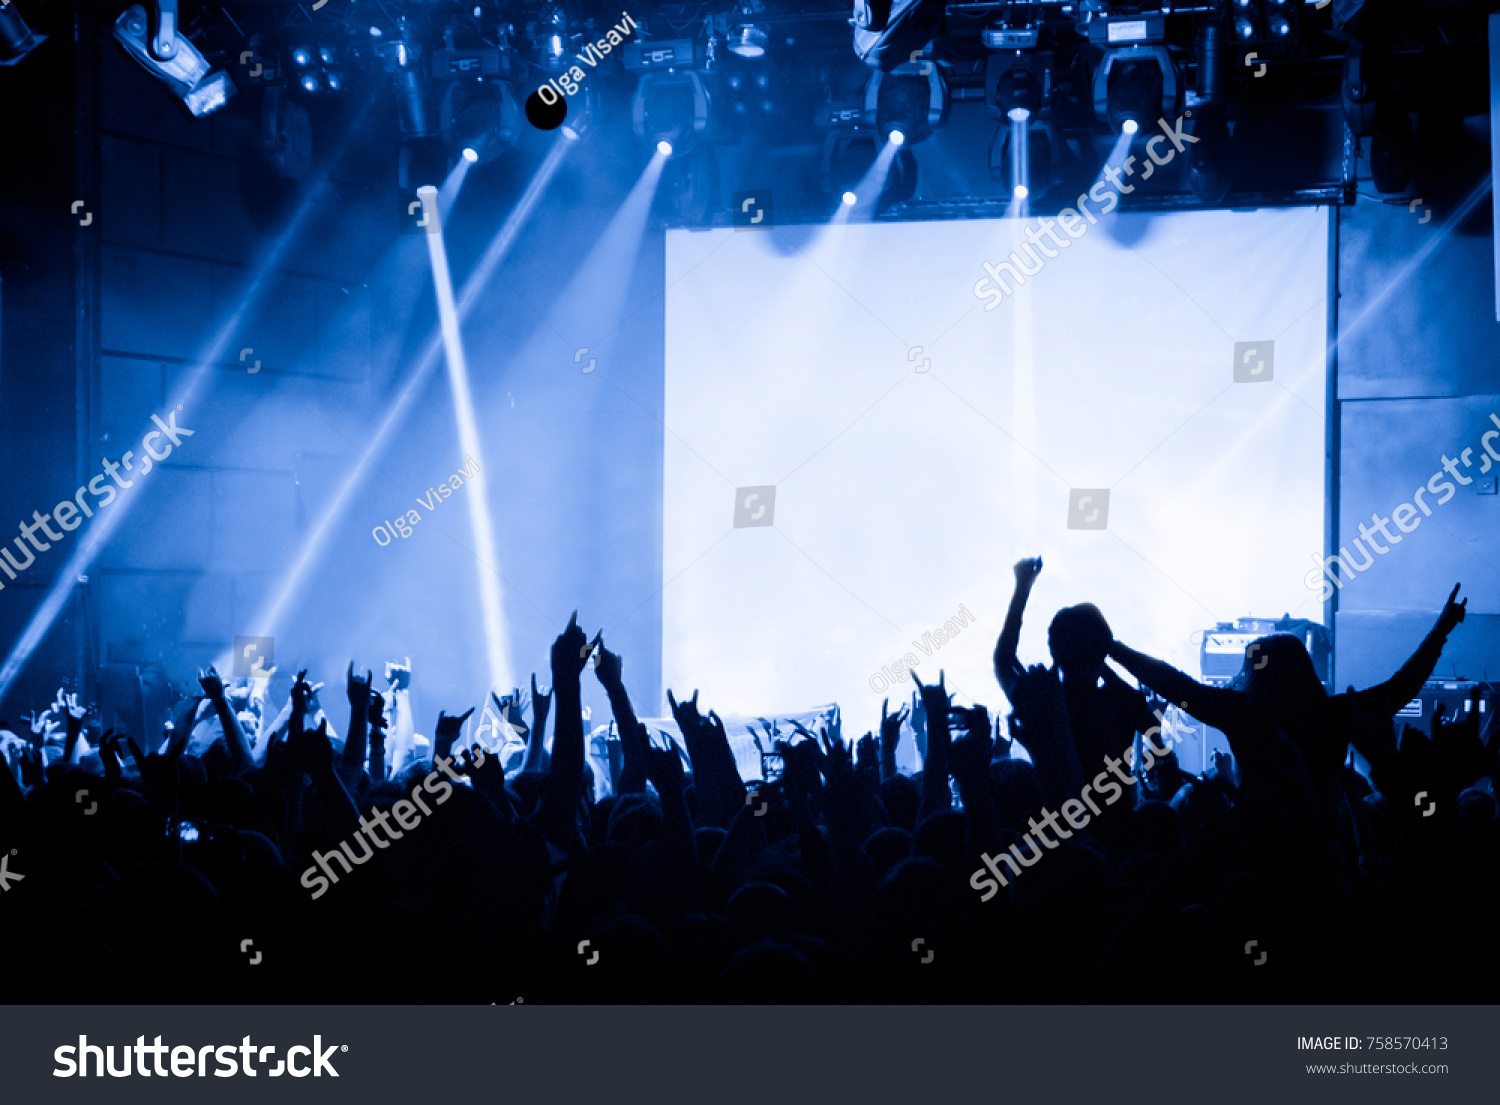 33,575 Club screen Images, Stock Photos & Vectors | Shutterstock